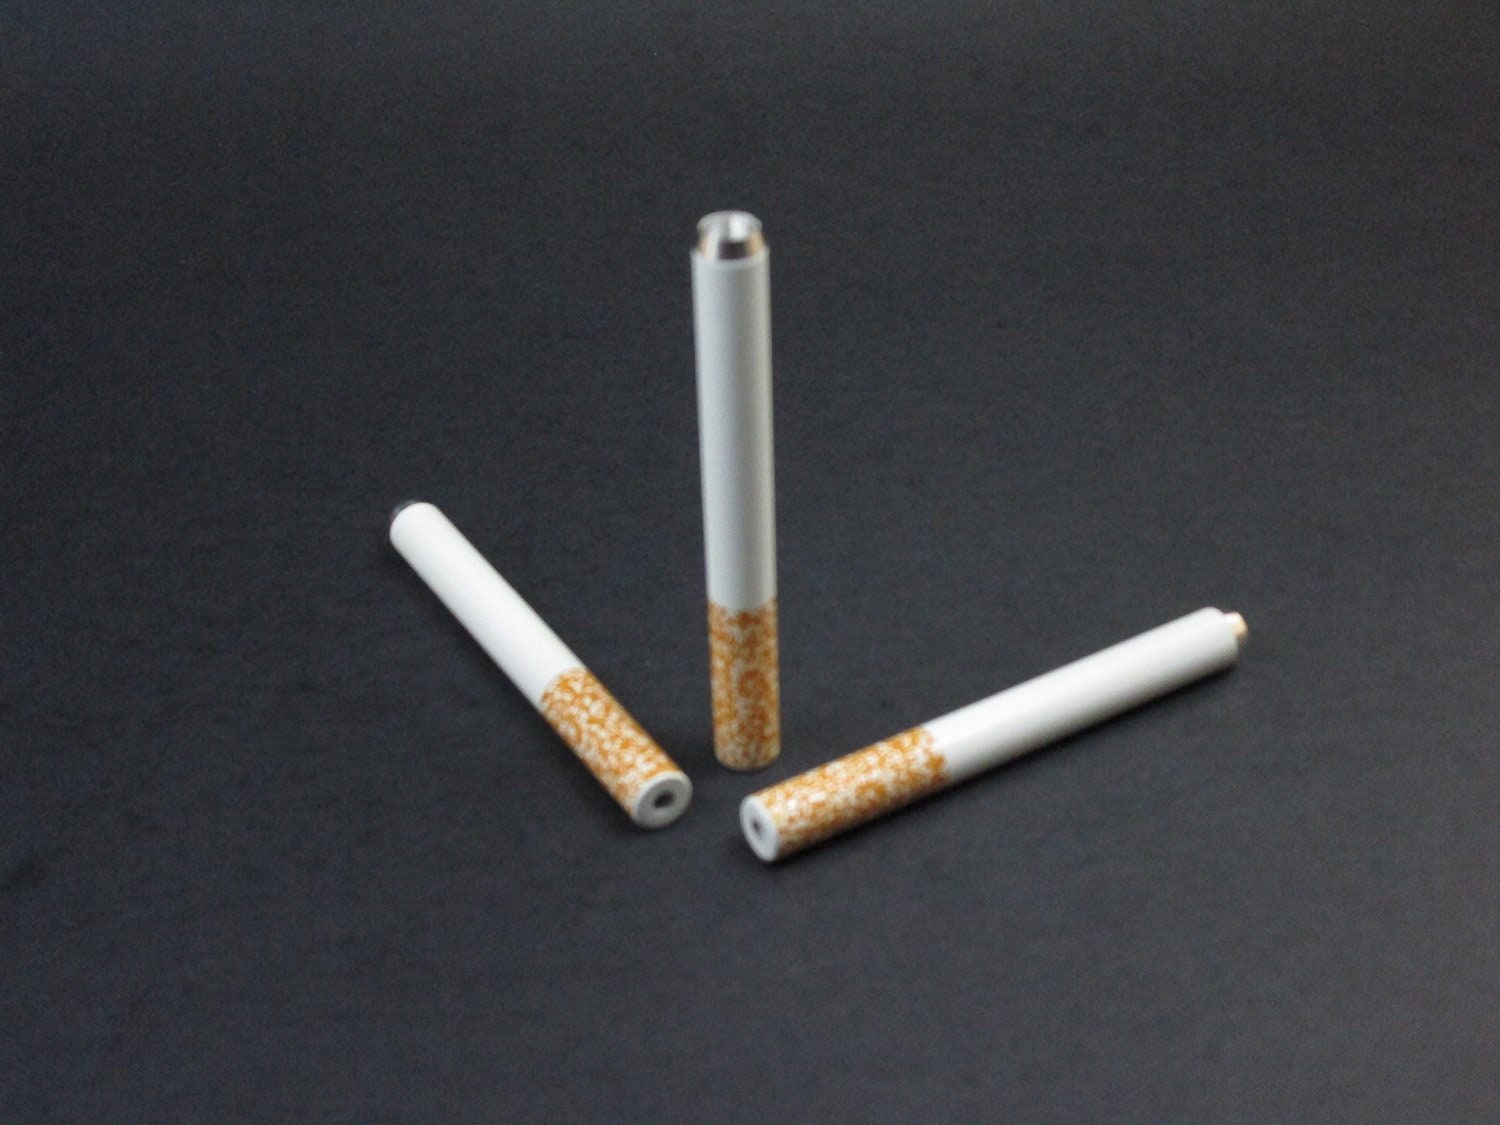 Fully Automatic Cigarette Rolling Machine Cigarro Electronicos Smoke  зажигалка Pipes Smoking Grass Smoking Accessories Gadget - AliExpress